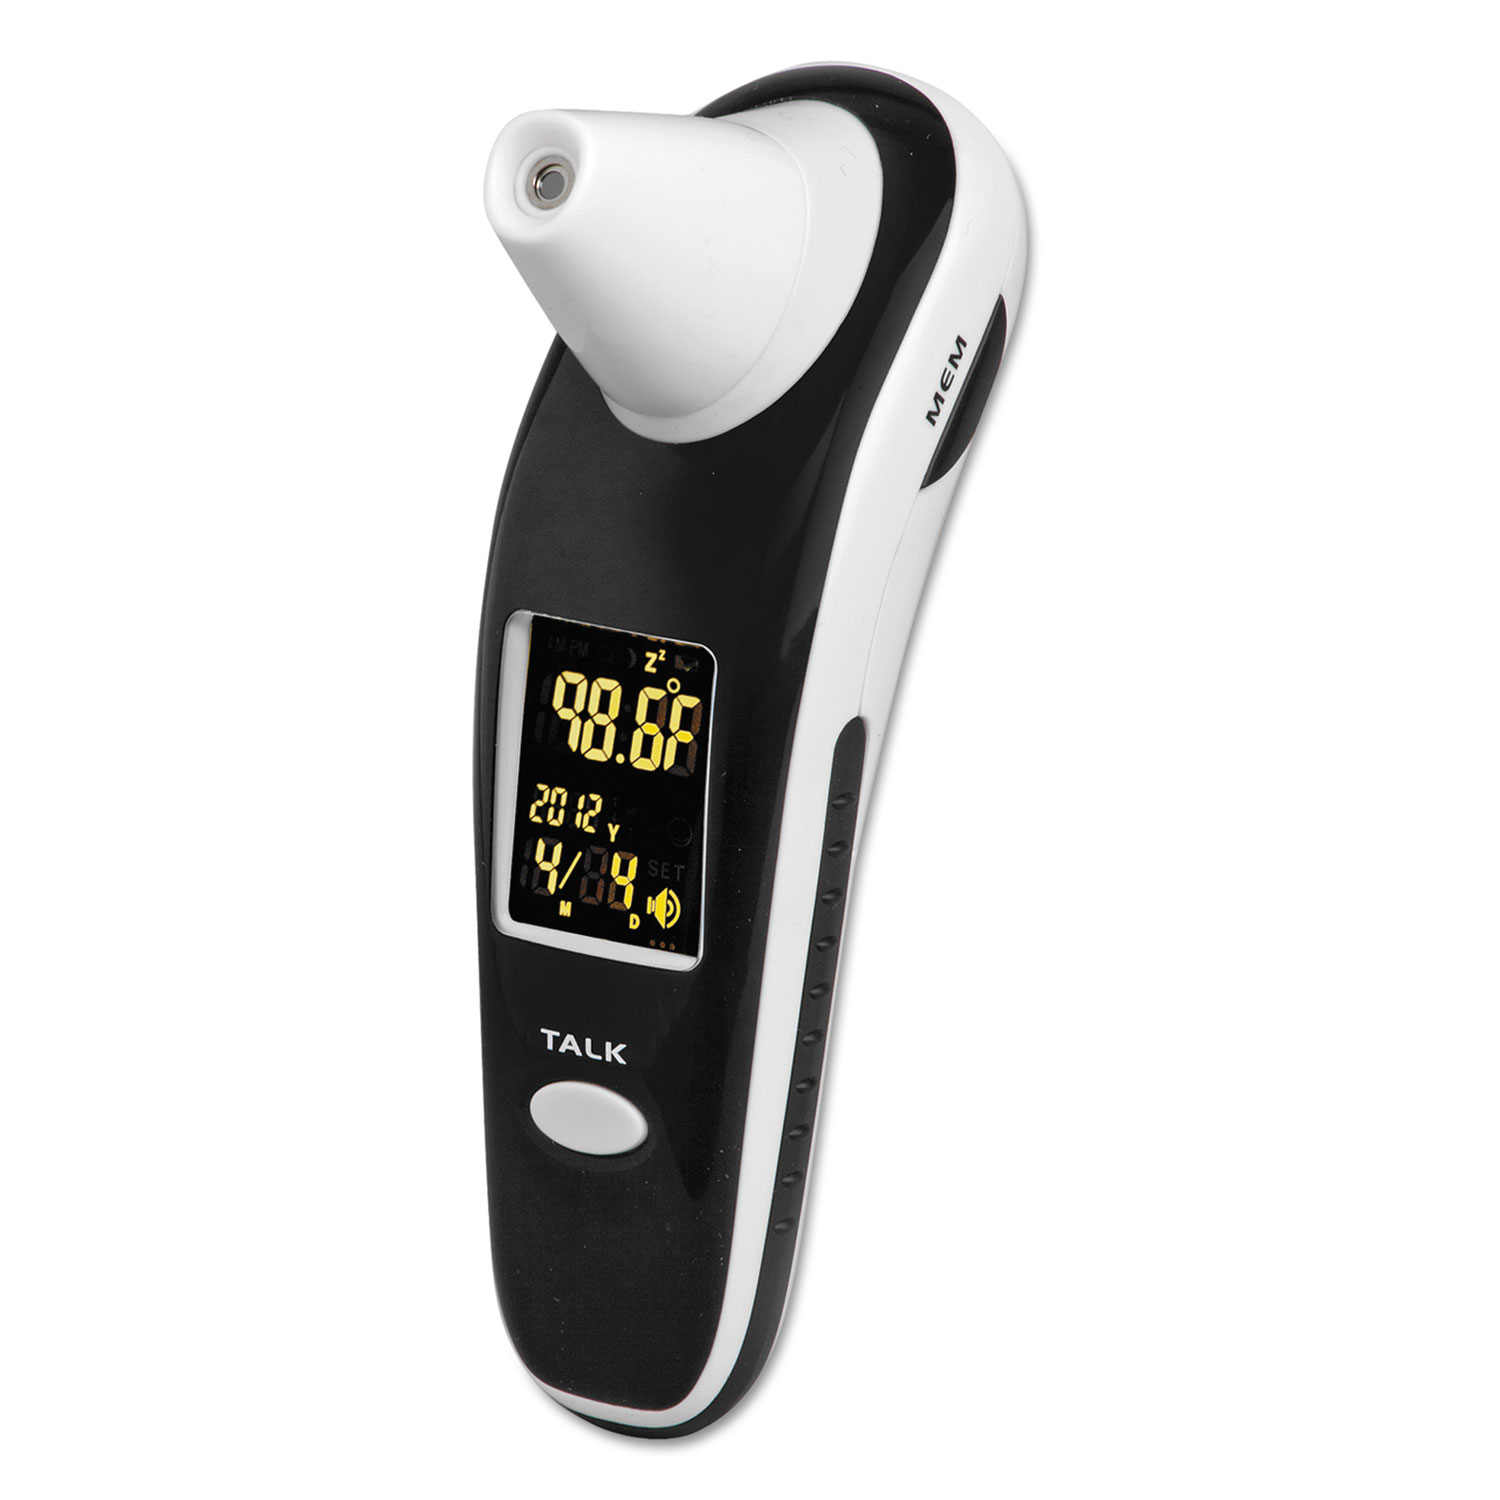  HealthSmart 18-935-000 DigiScan Forehead & Ear Thermometer, Black/White, Digital/Verbal Readout (BGH18935000) 